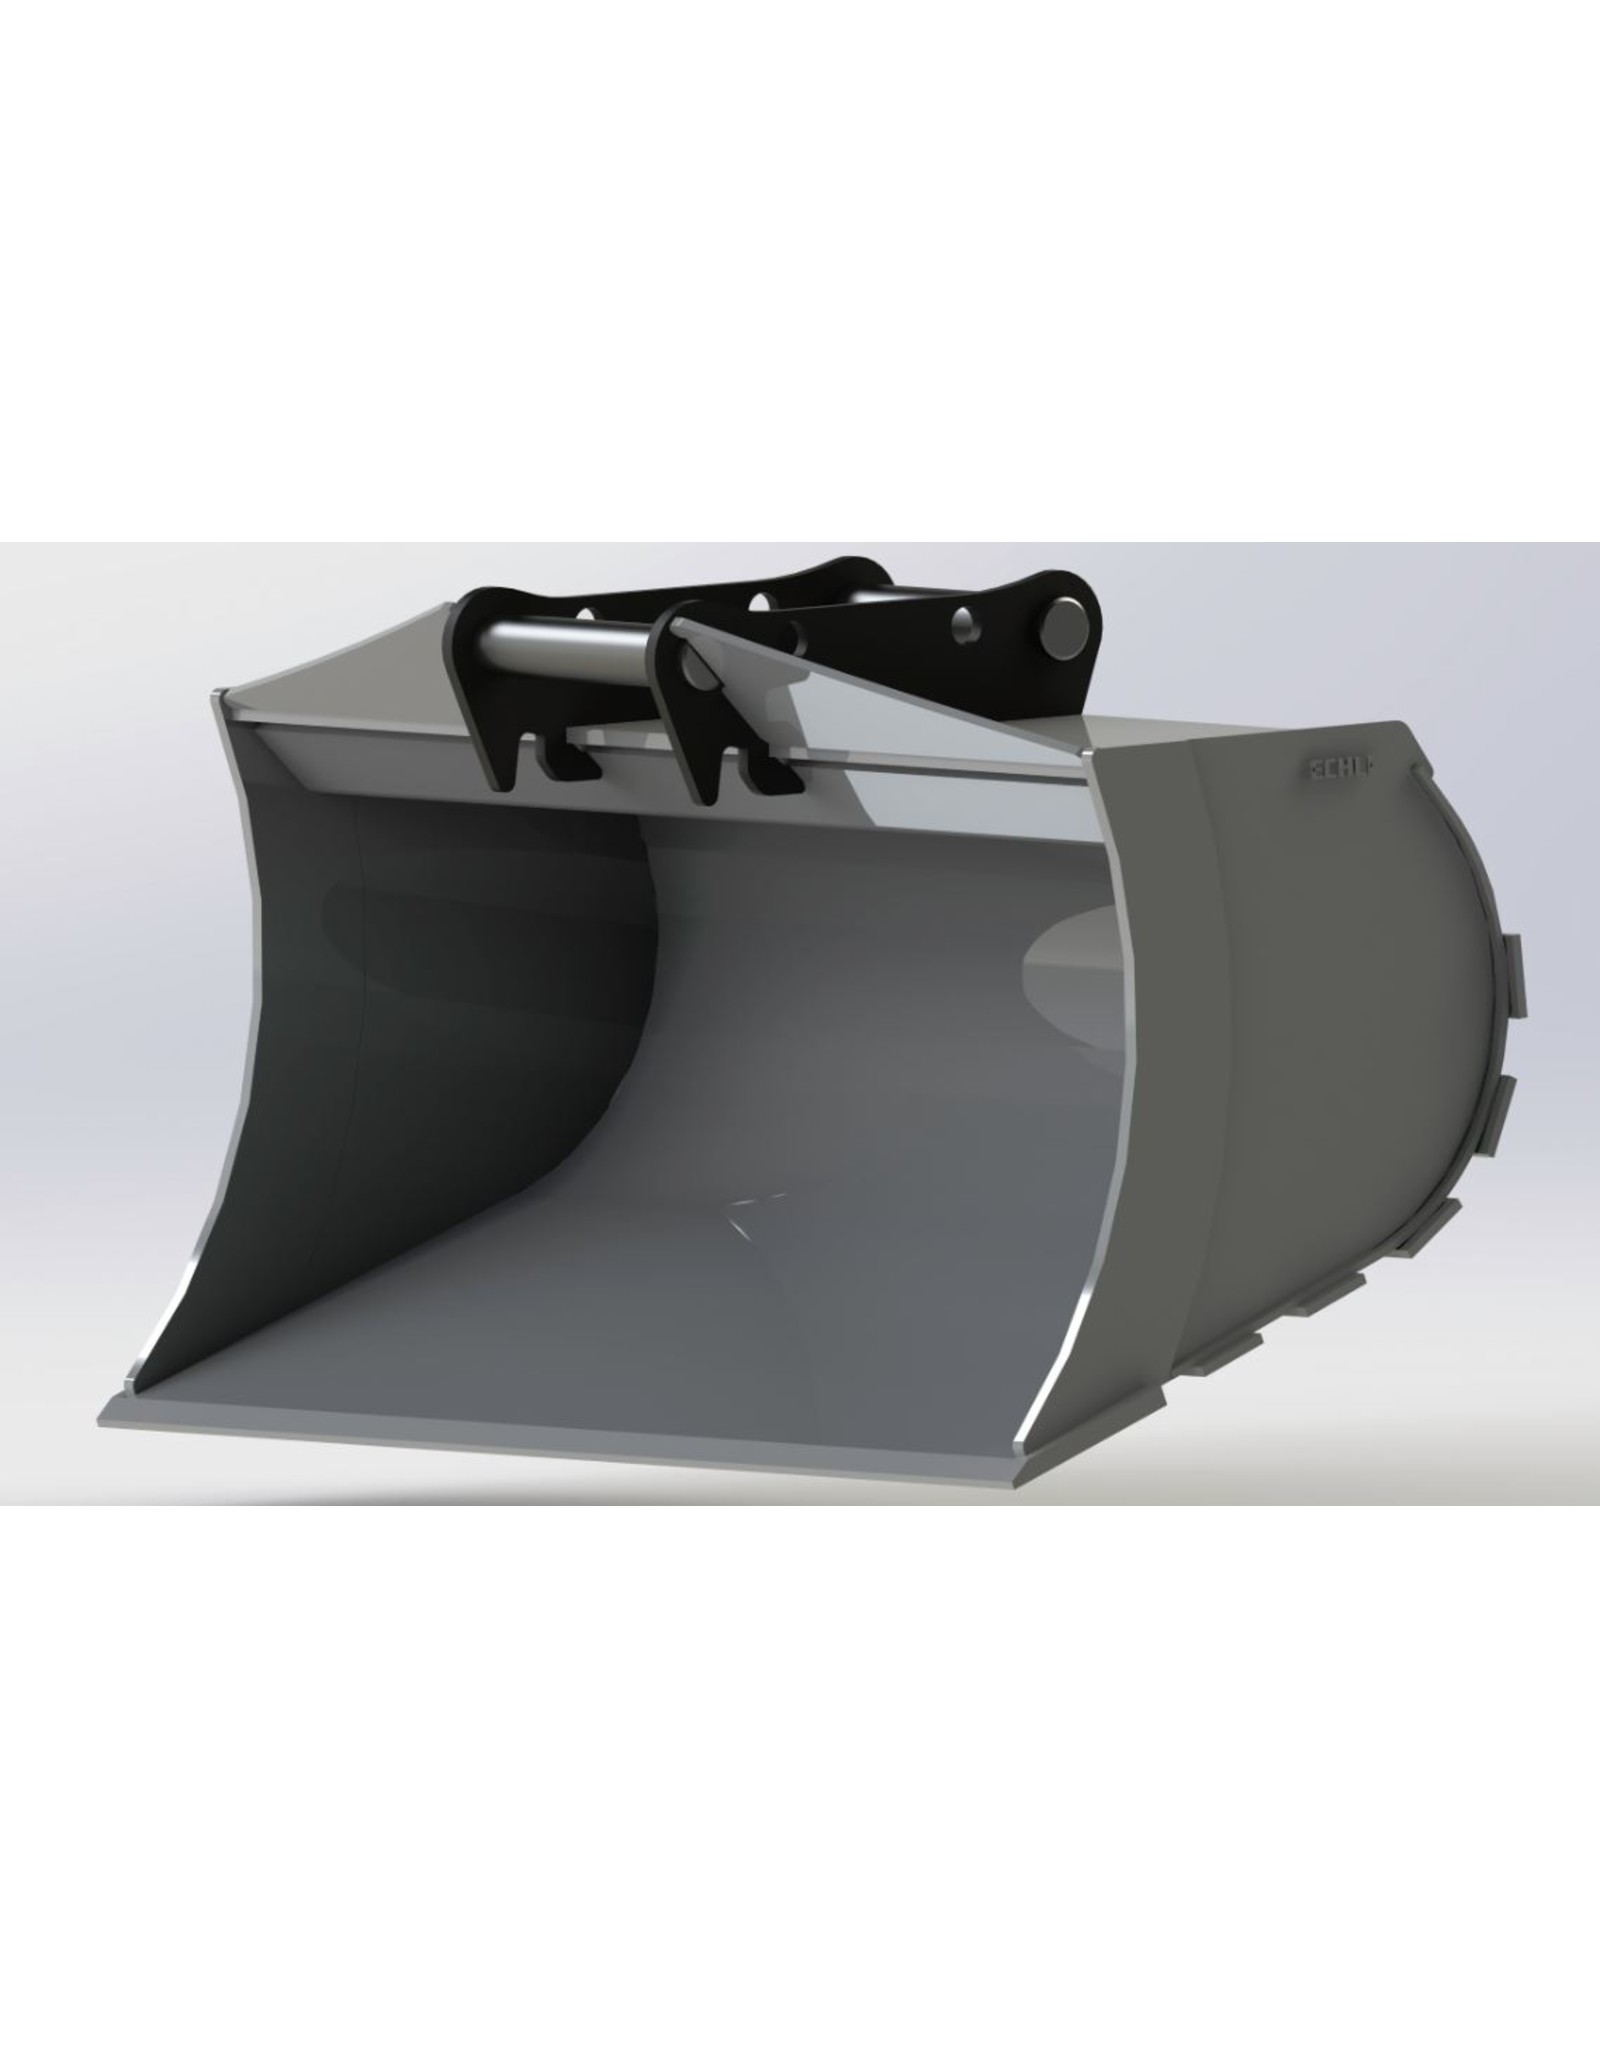 Echle Hartstahl GmbH Rigid universal bucket for excavators with 8-10 tons